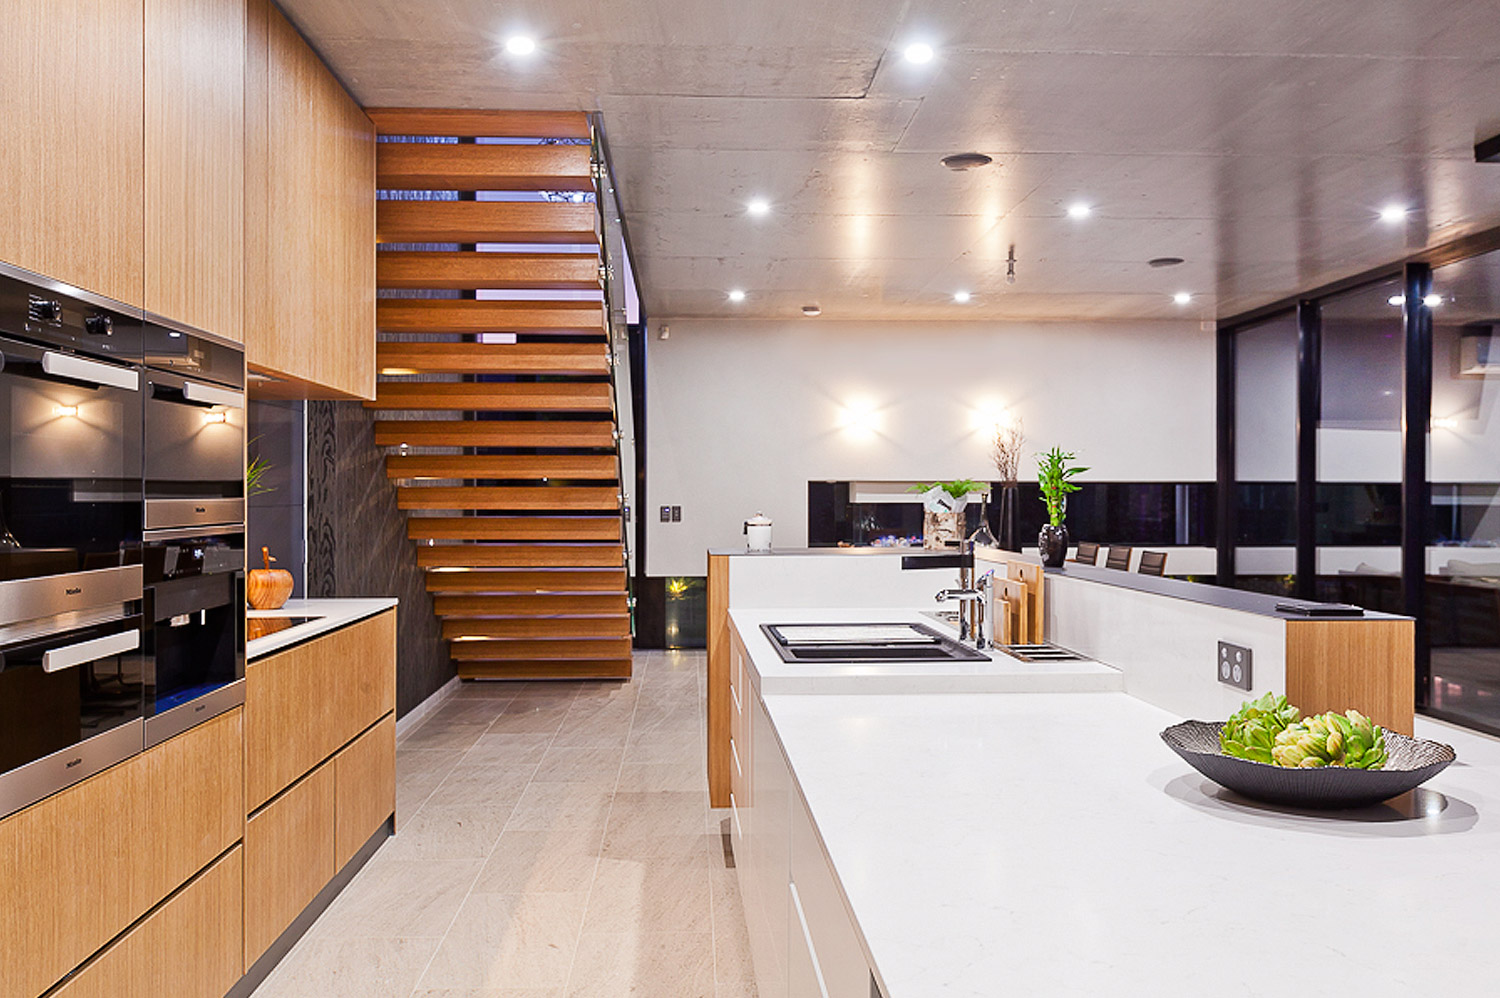 churchland home kitchen designed by Studio Seventy Four